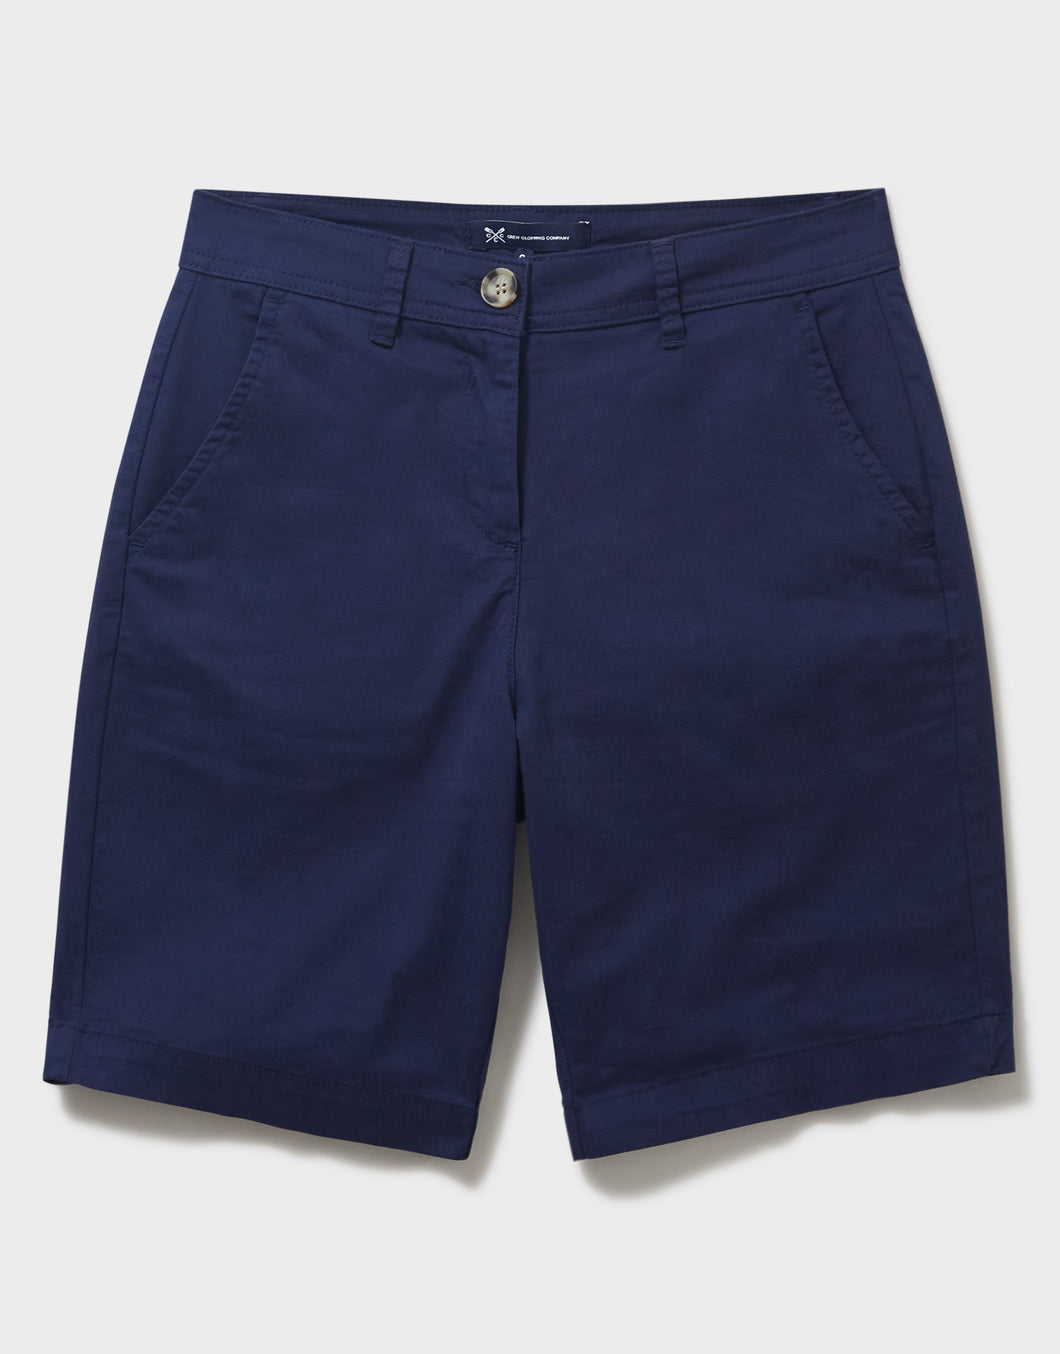 Crew Clothing - Chino Shorts